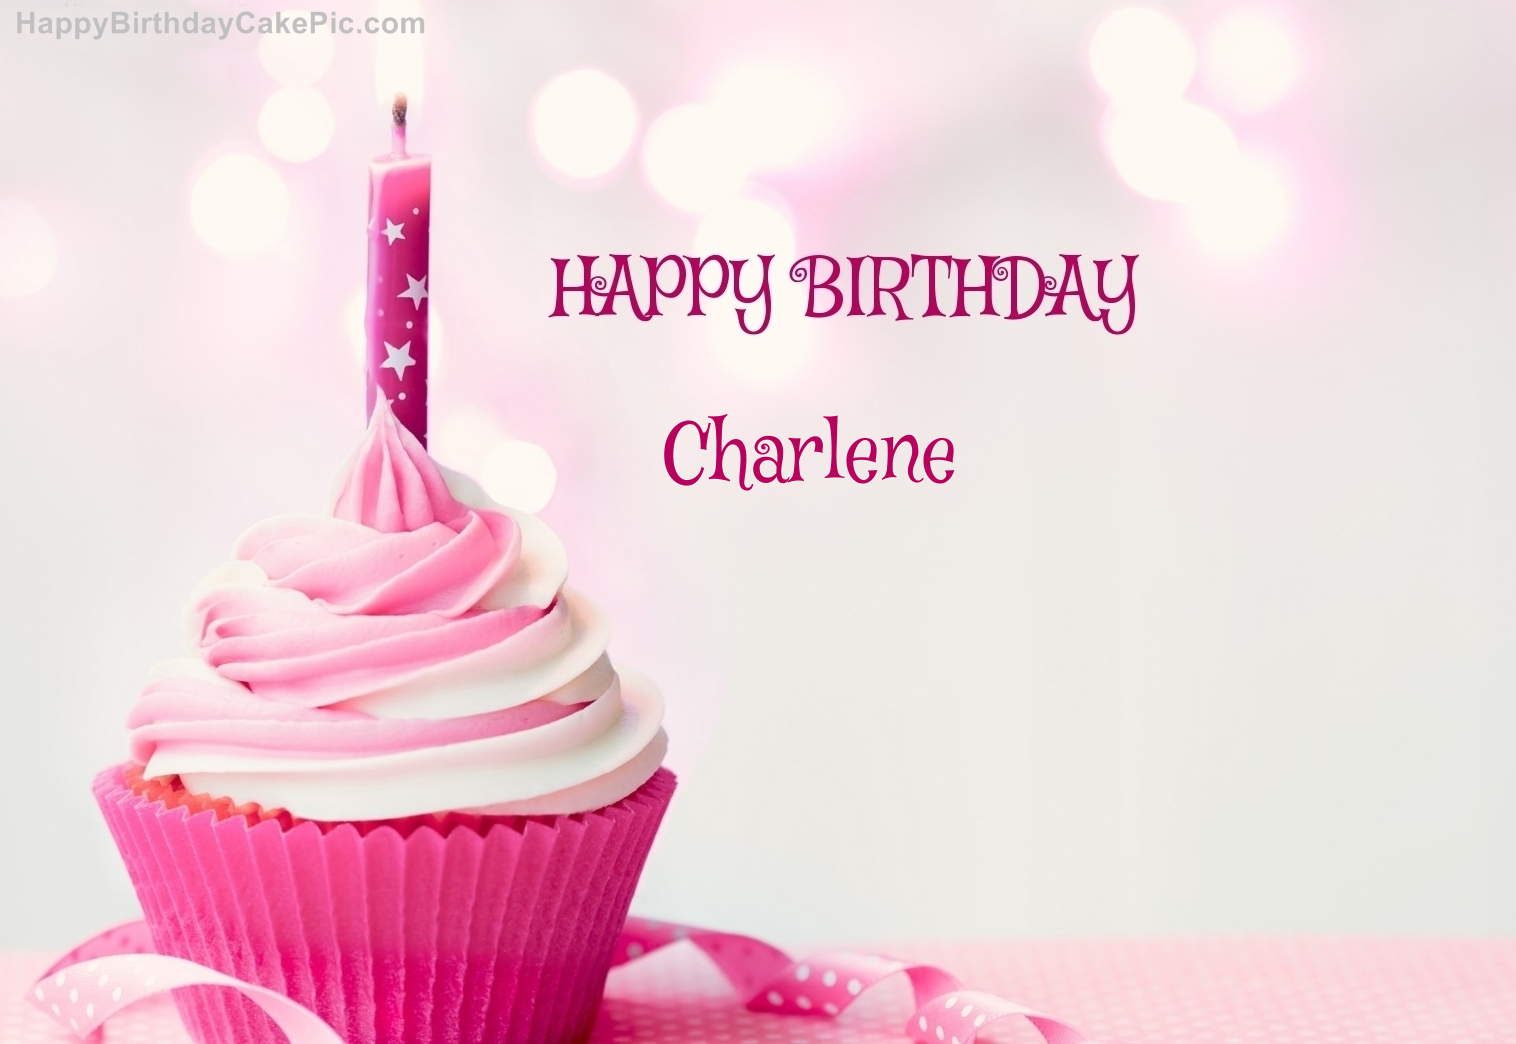 Image result for happy birthday cupcake charlene image